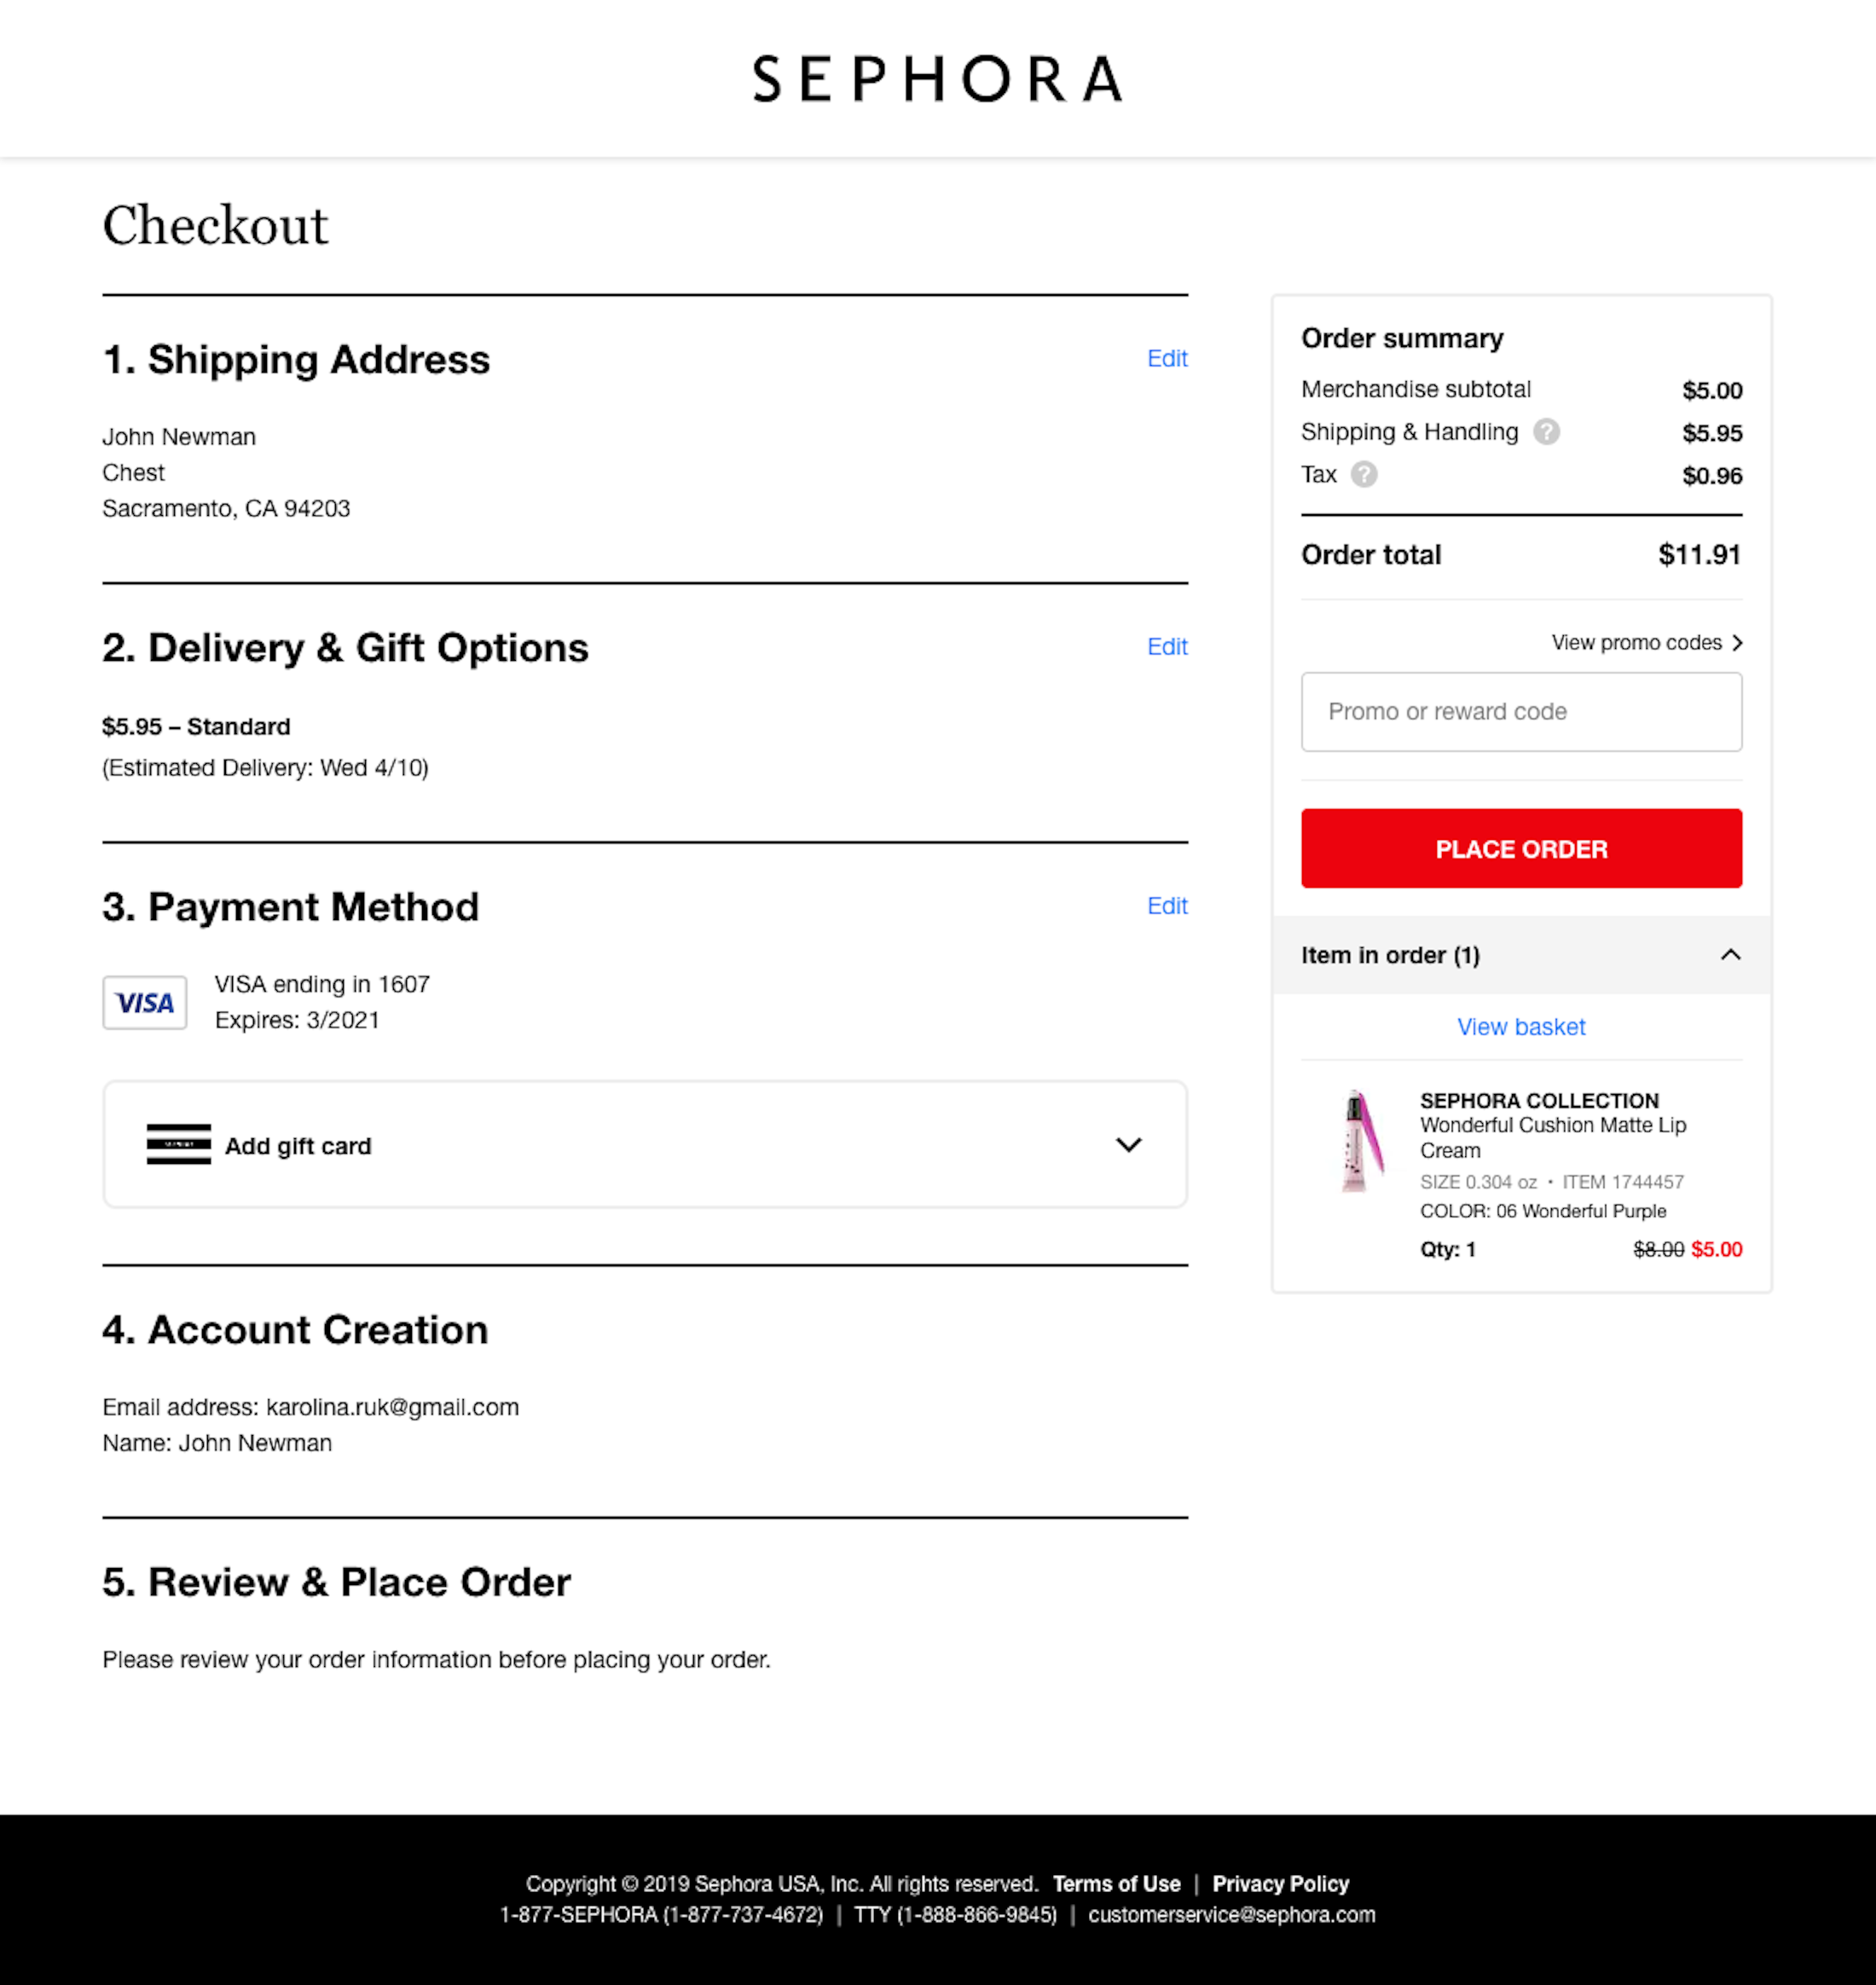 SEPHORA NPS & Customer Reviews